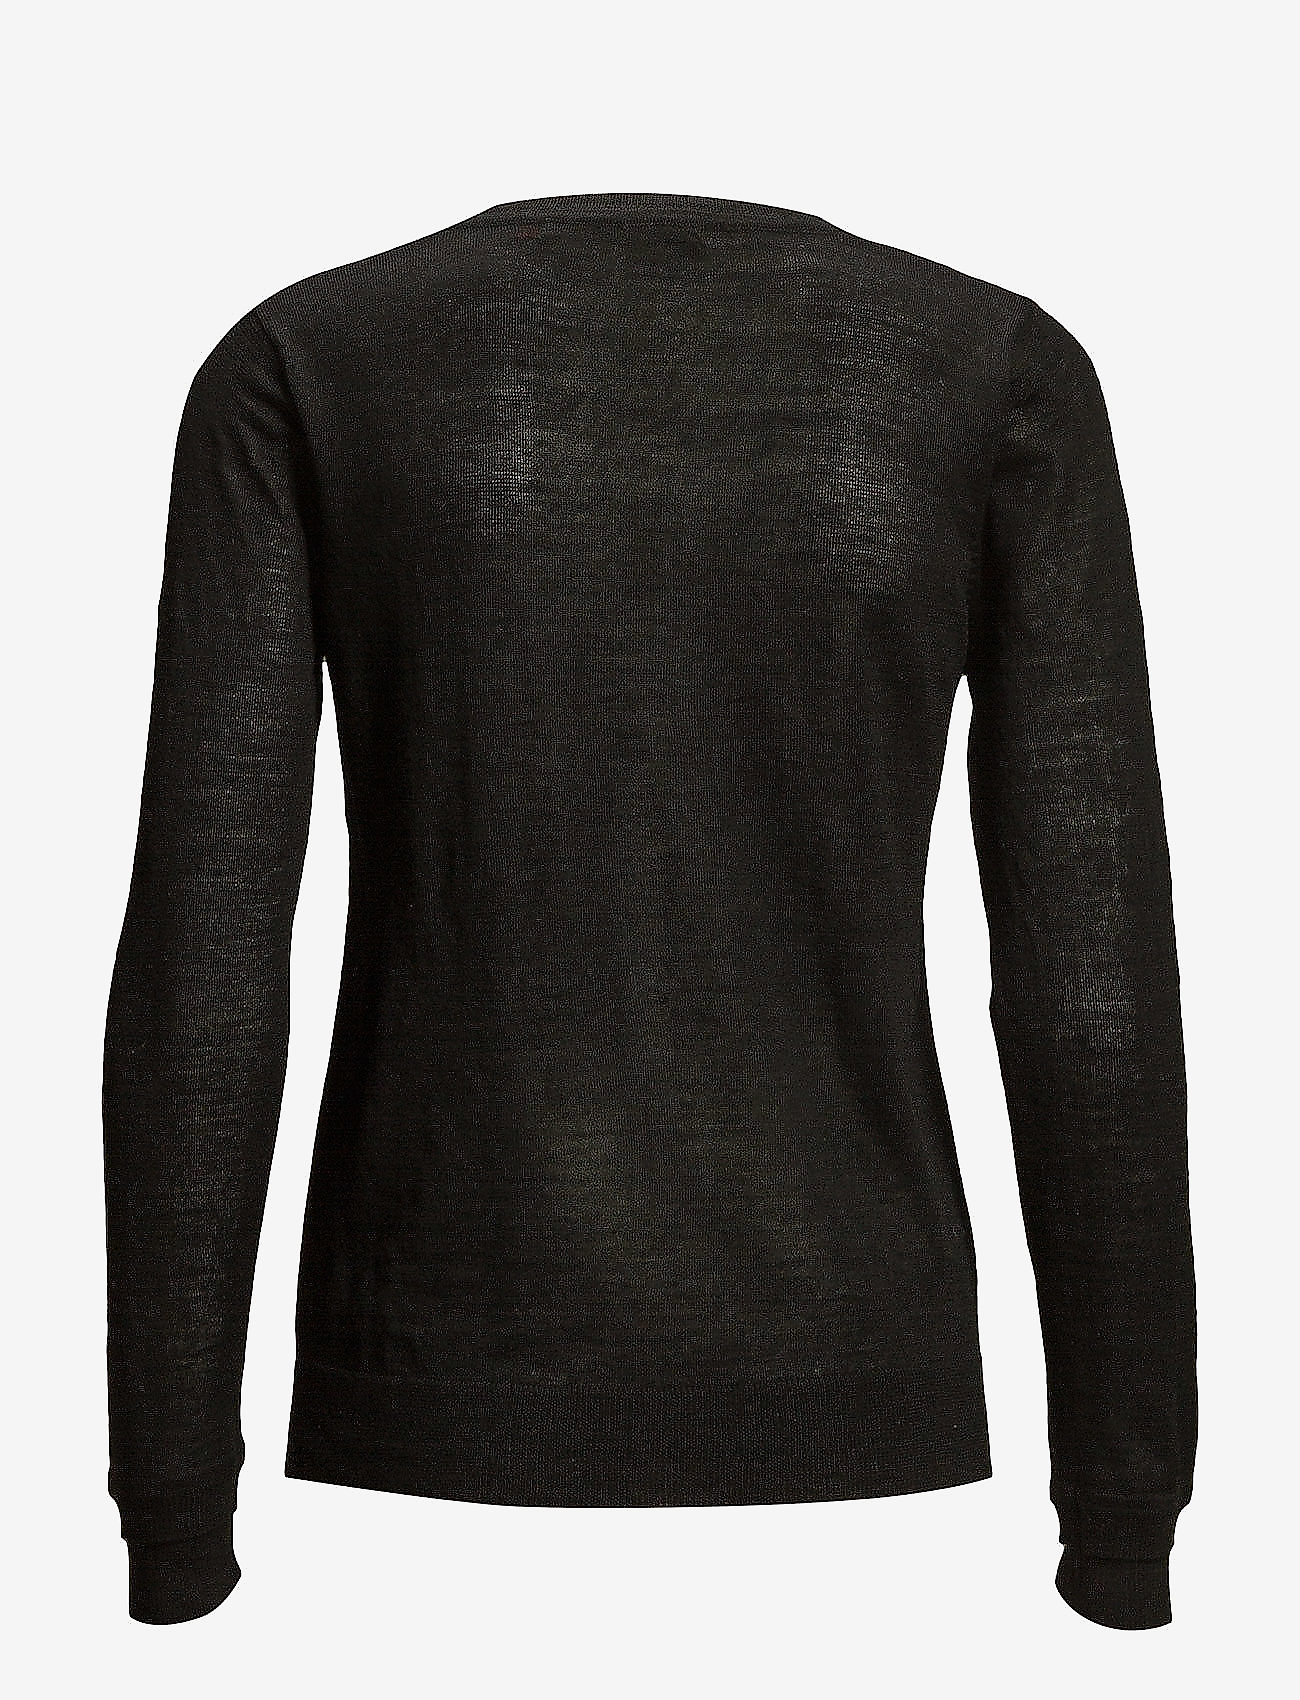 Coster Copenhagen - Round neck knit top merino (Basic) - black - 1